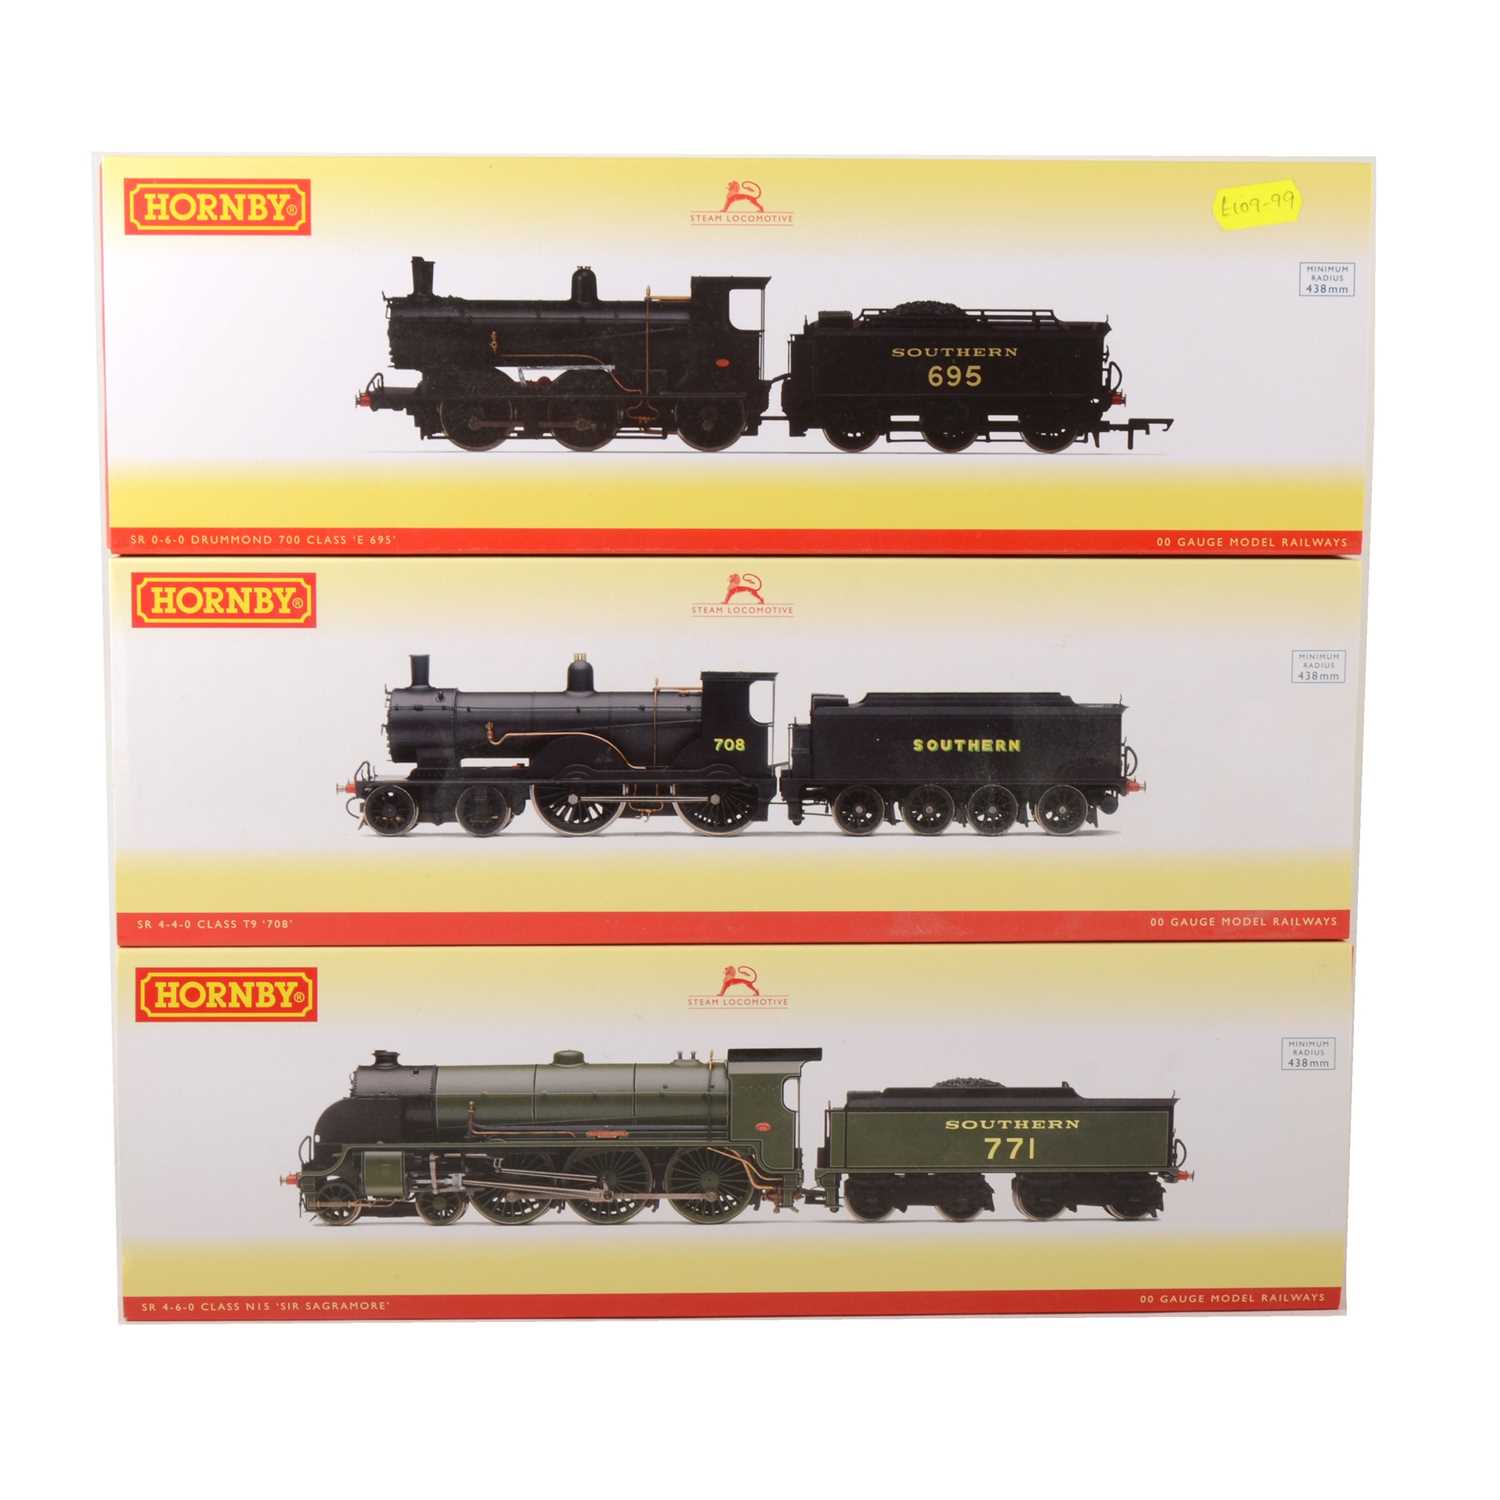 Lot 508 - Three Hornby OO gauge model railway locomotives, R3010, R3108 and R3238.